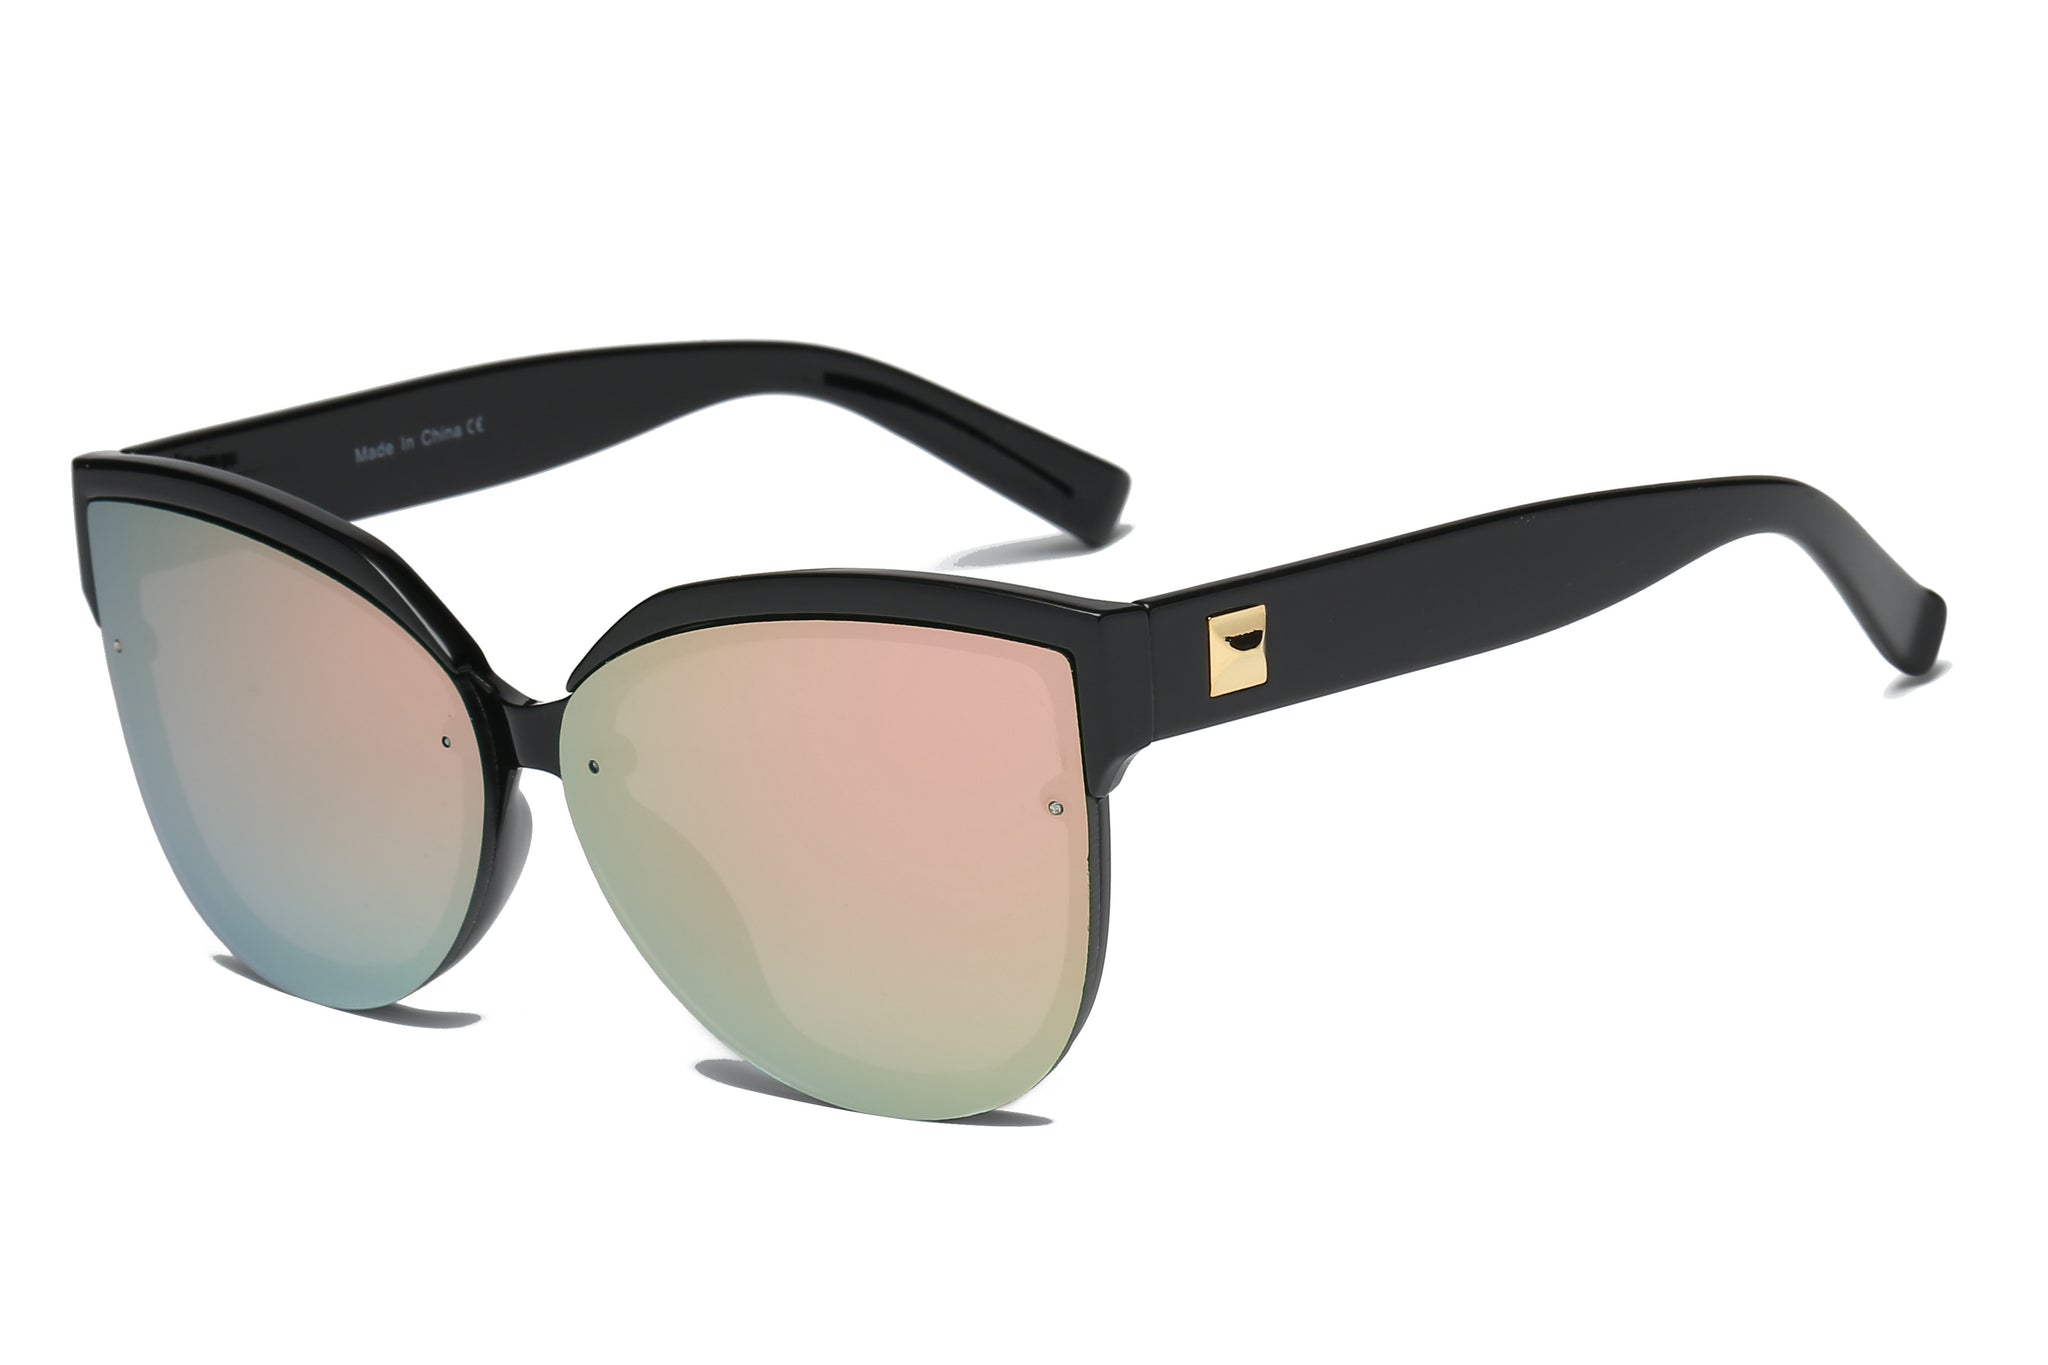 Women Fashion Round Cat Eye Sunglasses UV Protection